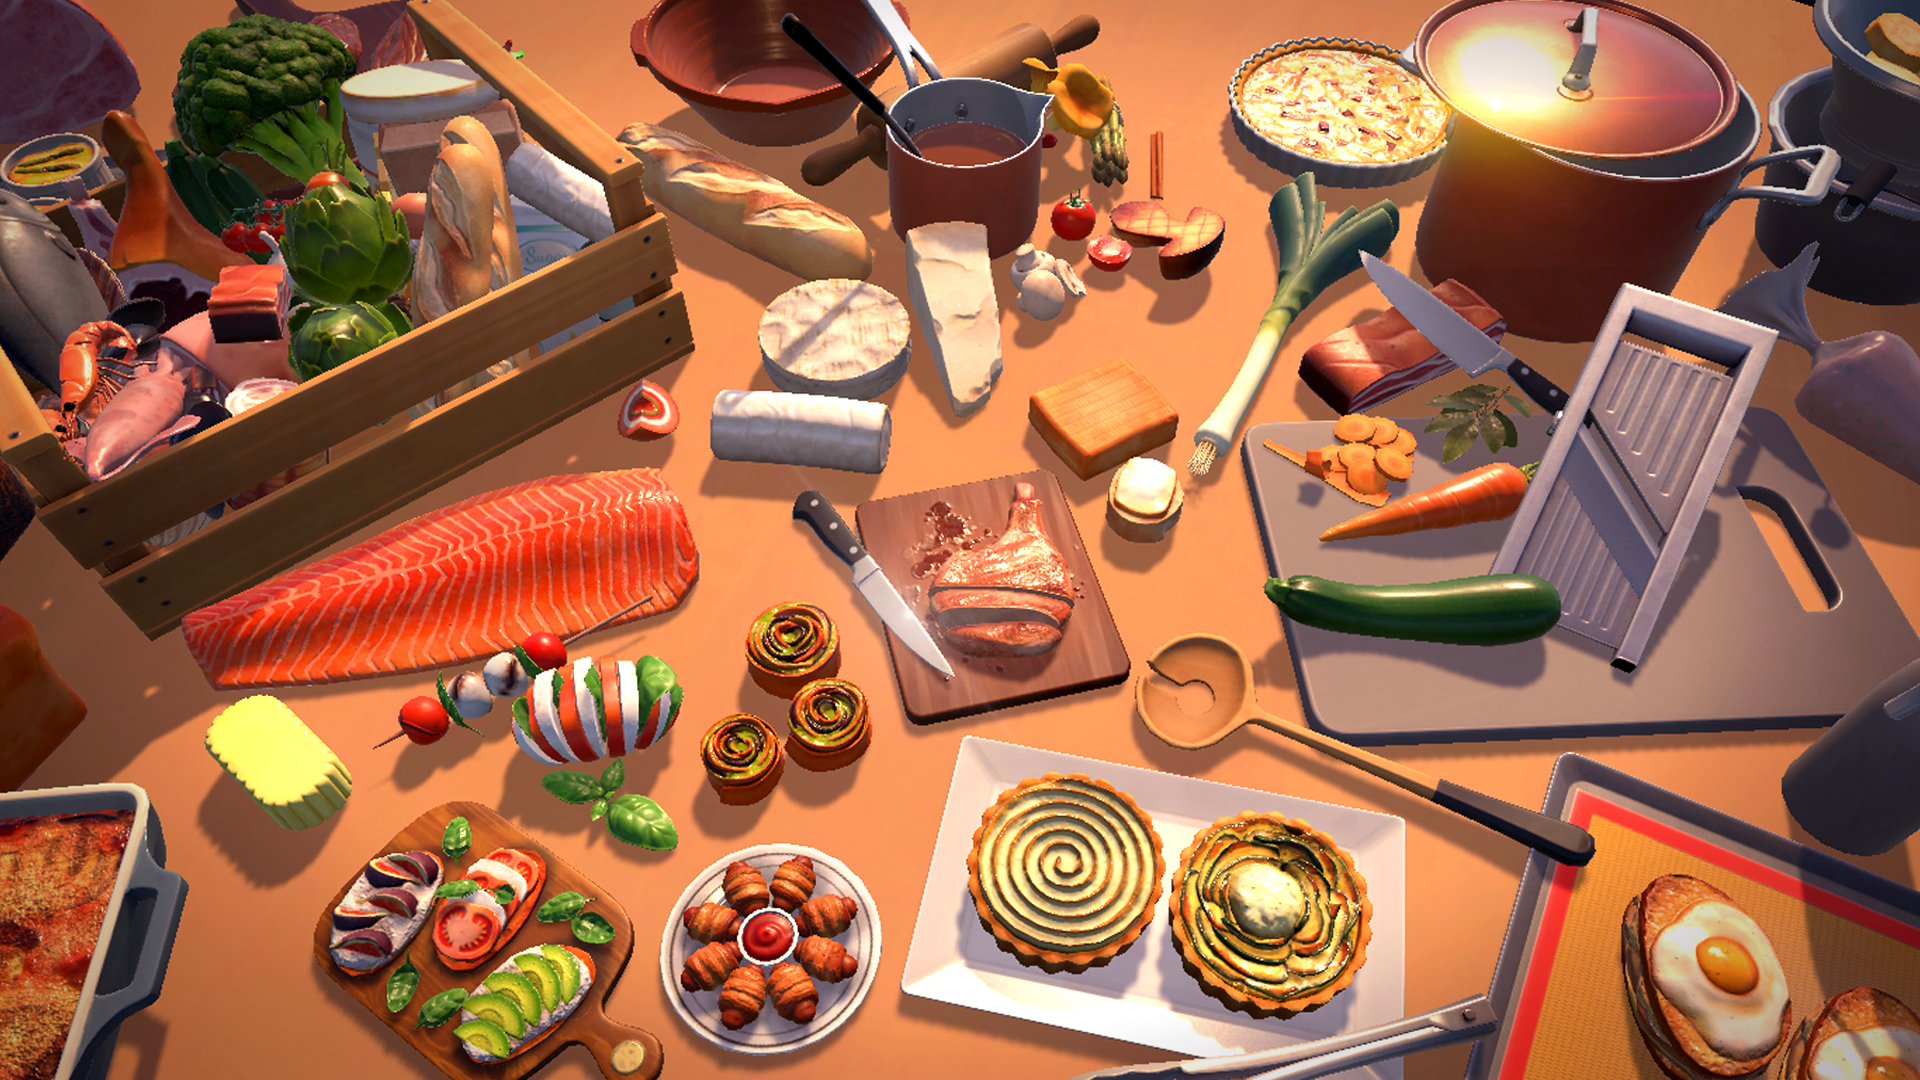 Simulator [Nintendo Switch] - A Al Restaurant - Chef Forno Life: Edition